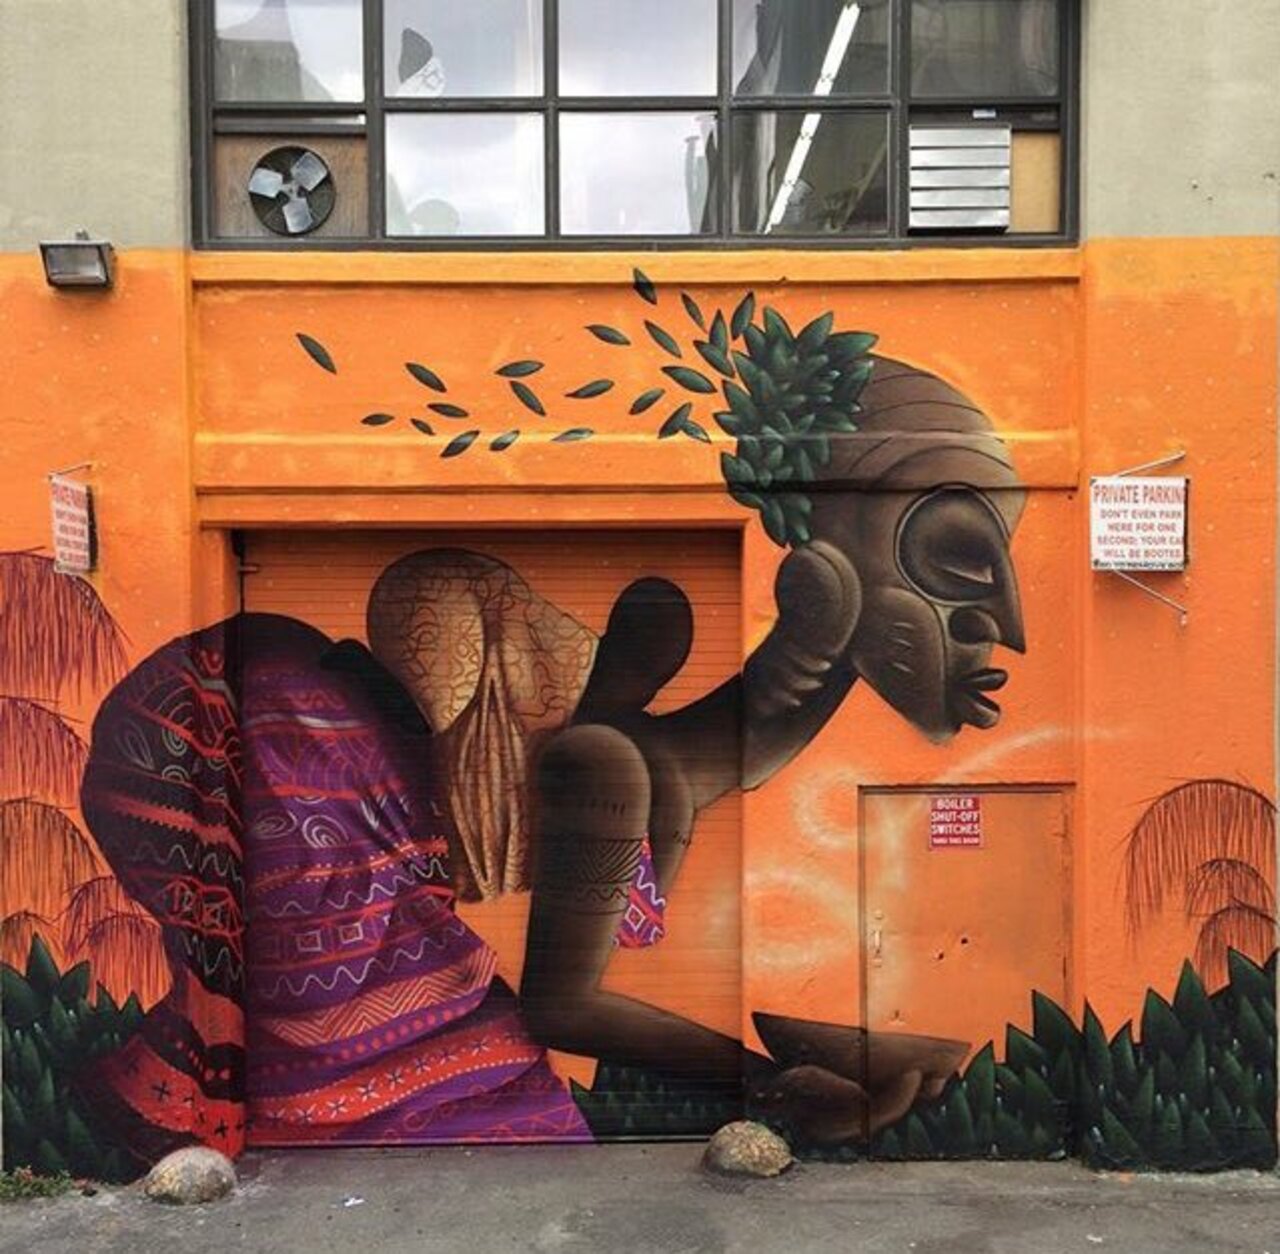 New Street Art by Alexandre Keto in NYC 

#art #graffiti #mural #streetart https://t.co/8feLyemC1r